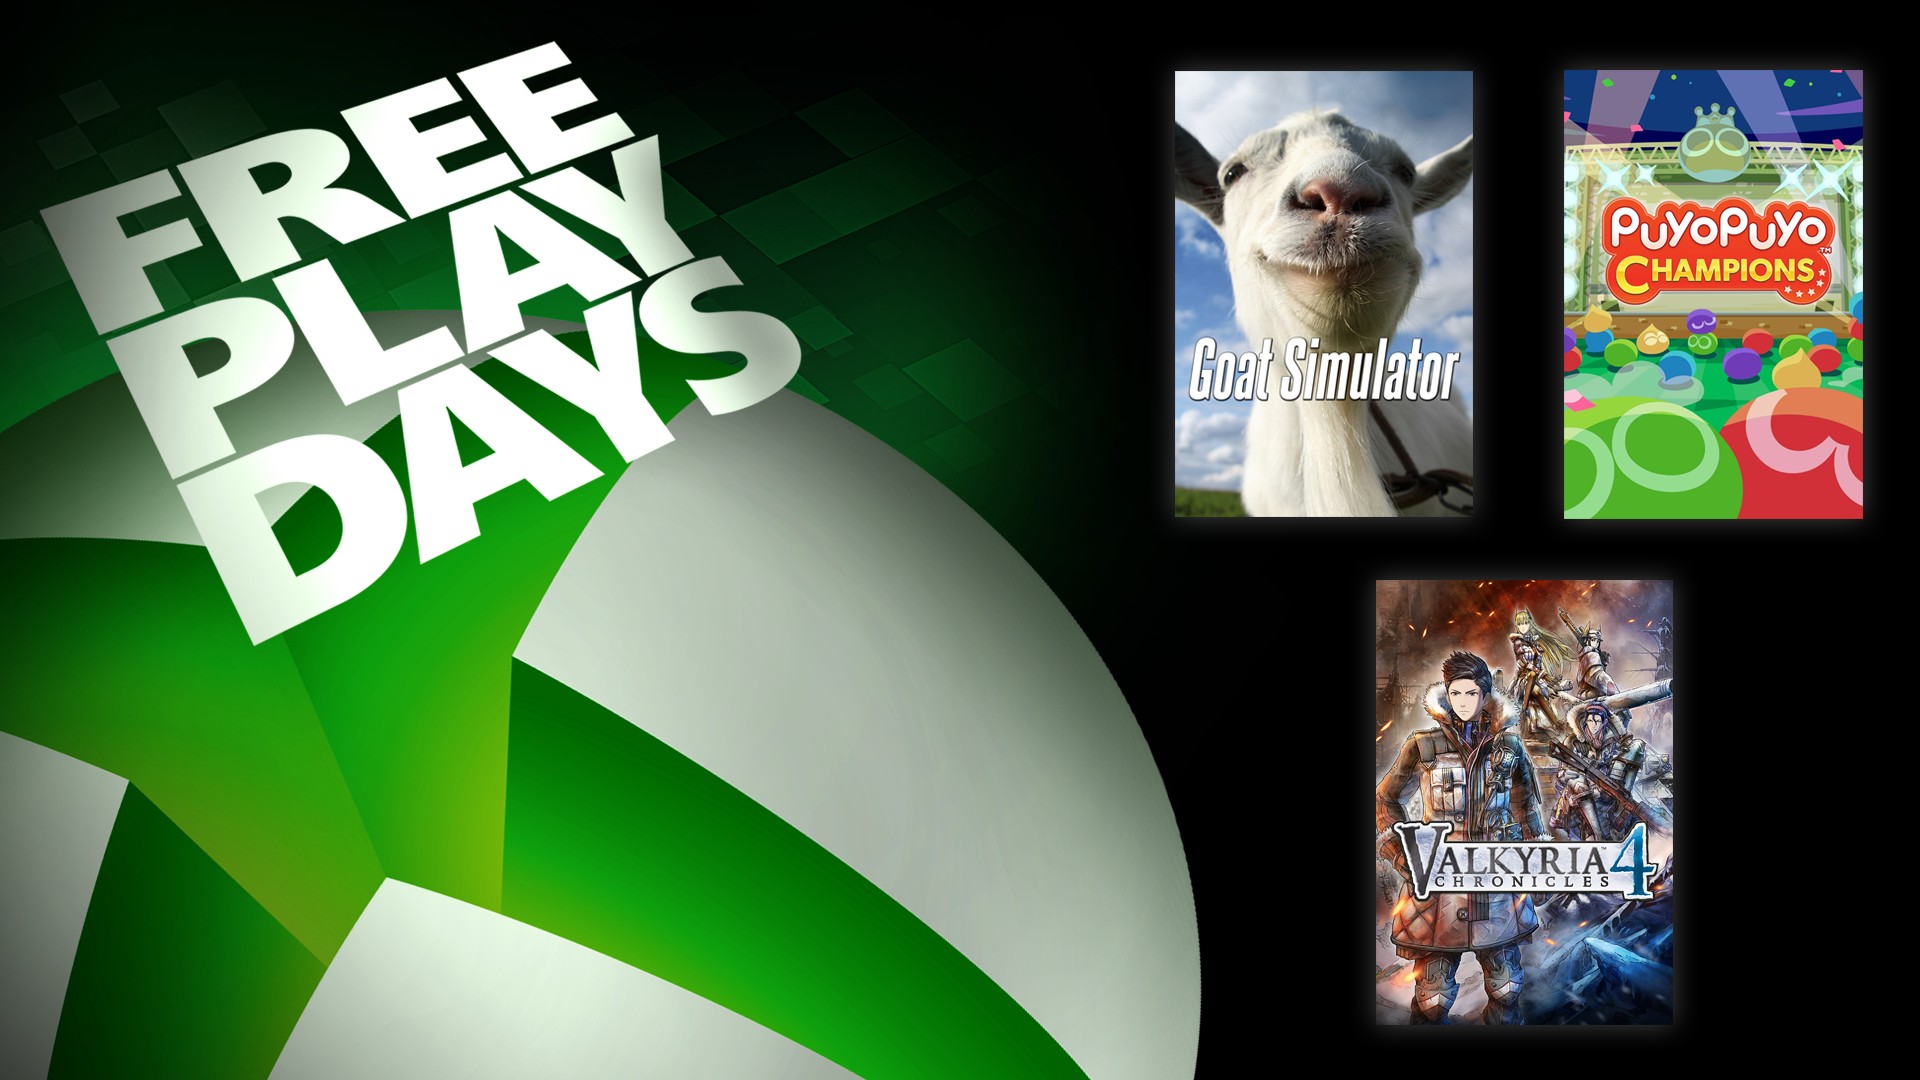 Free Play Days - December 19